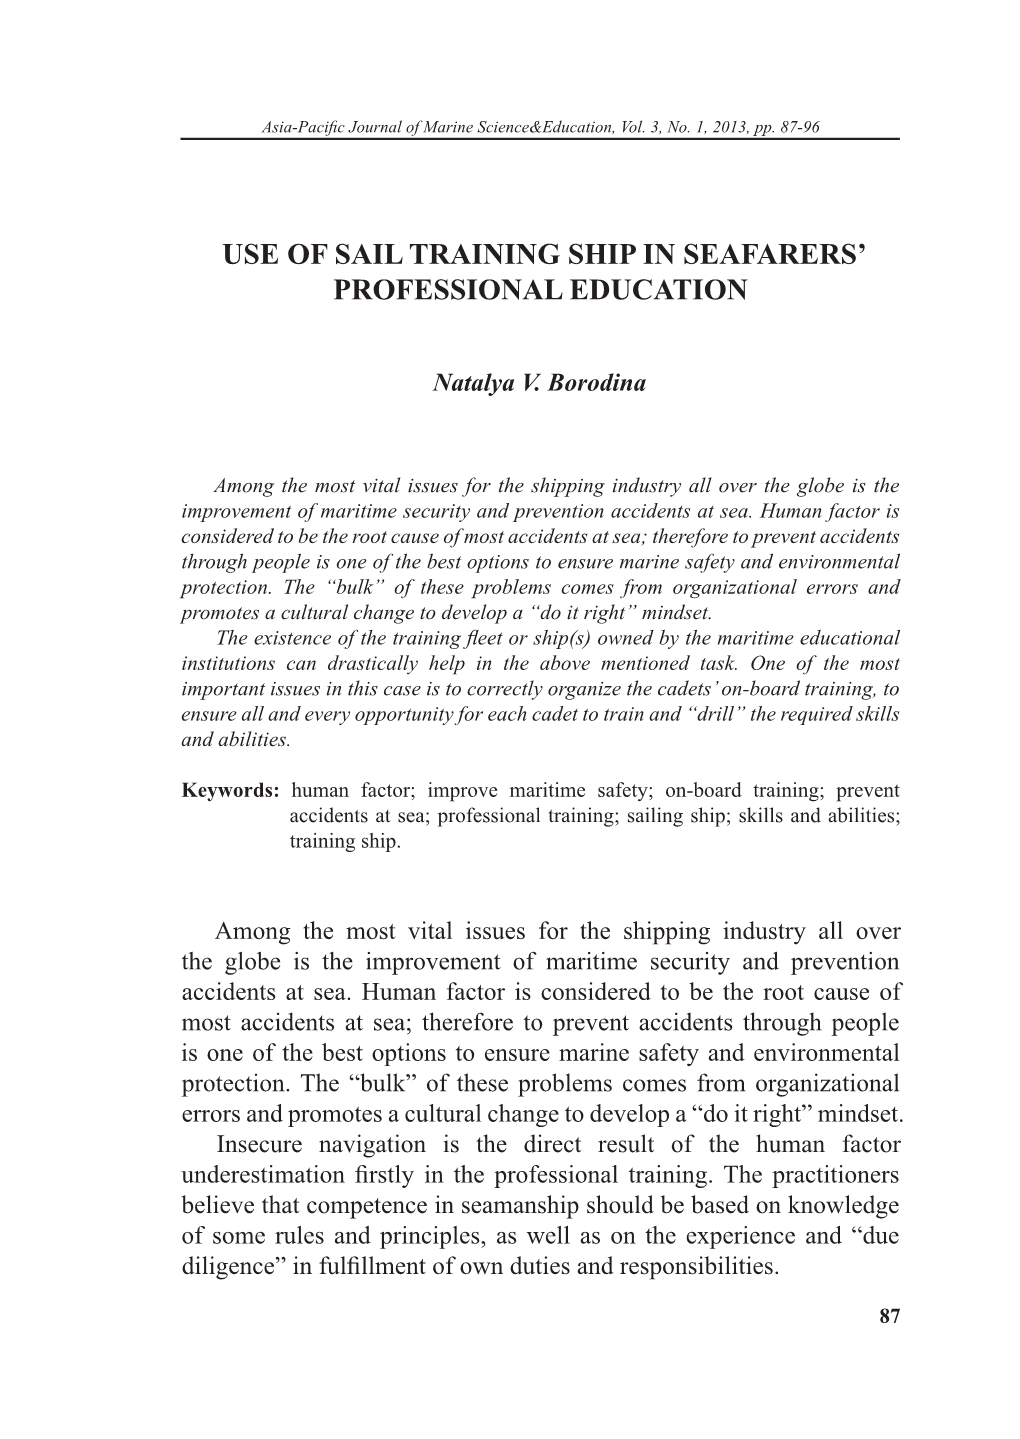 Use of Sail Training Ship in Seafarers' Professional